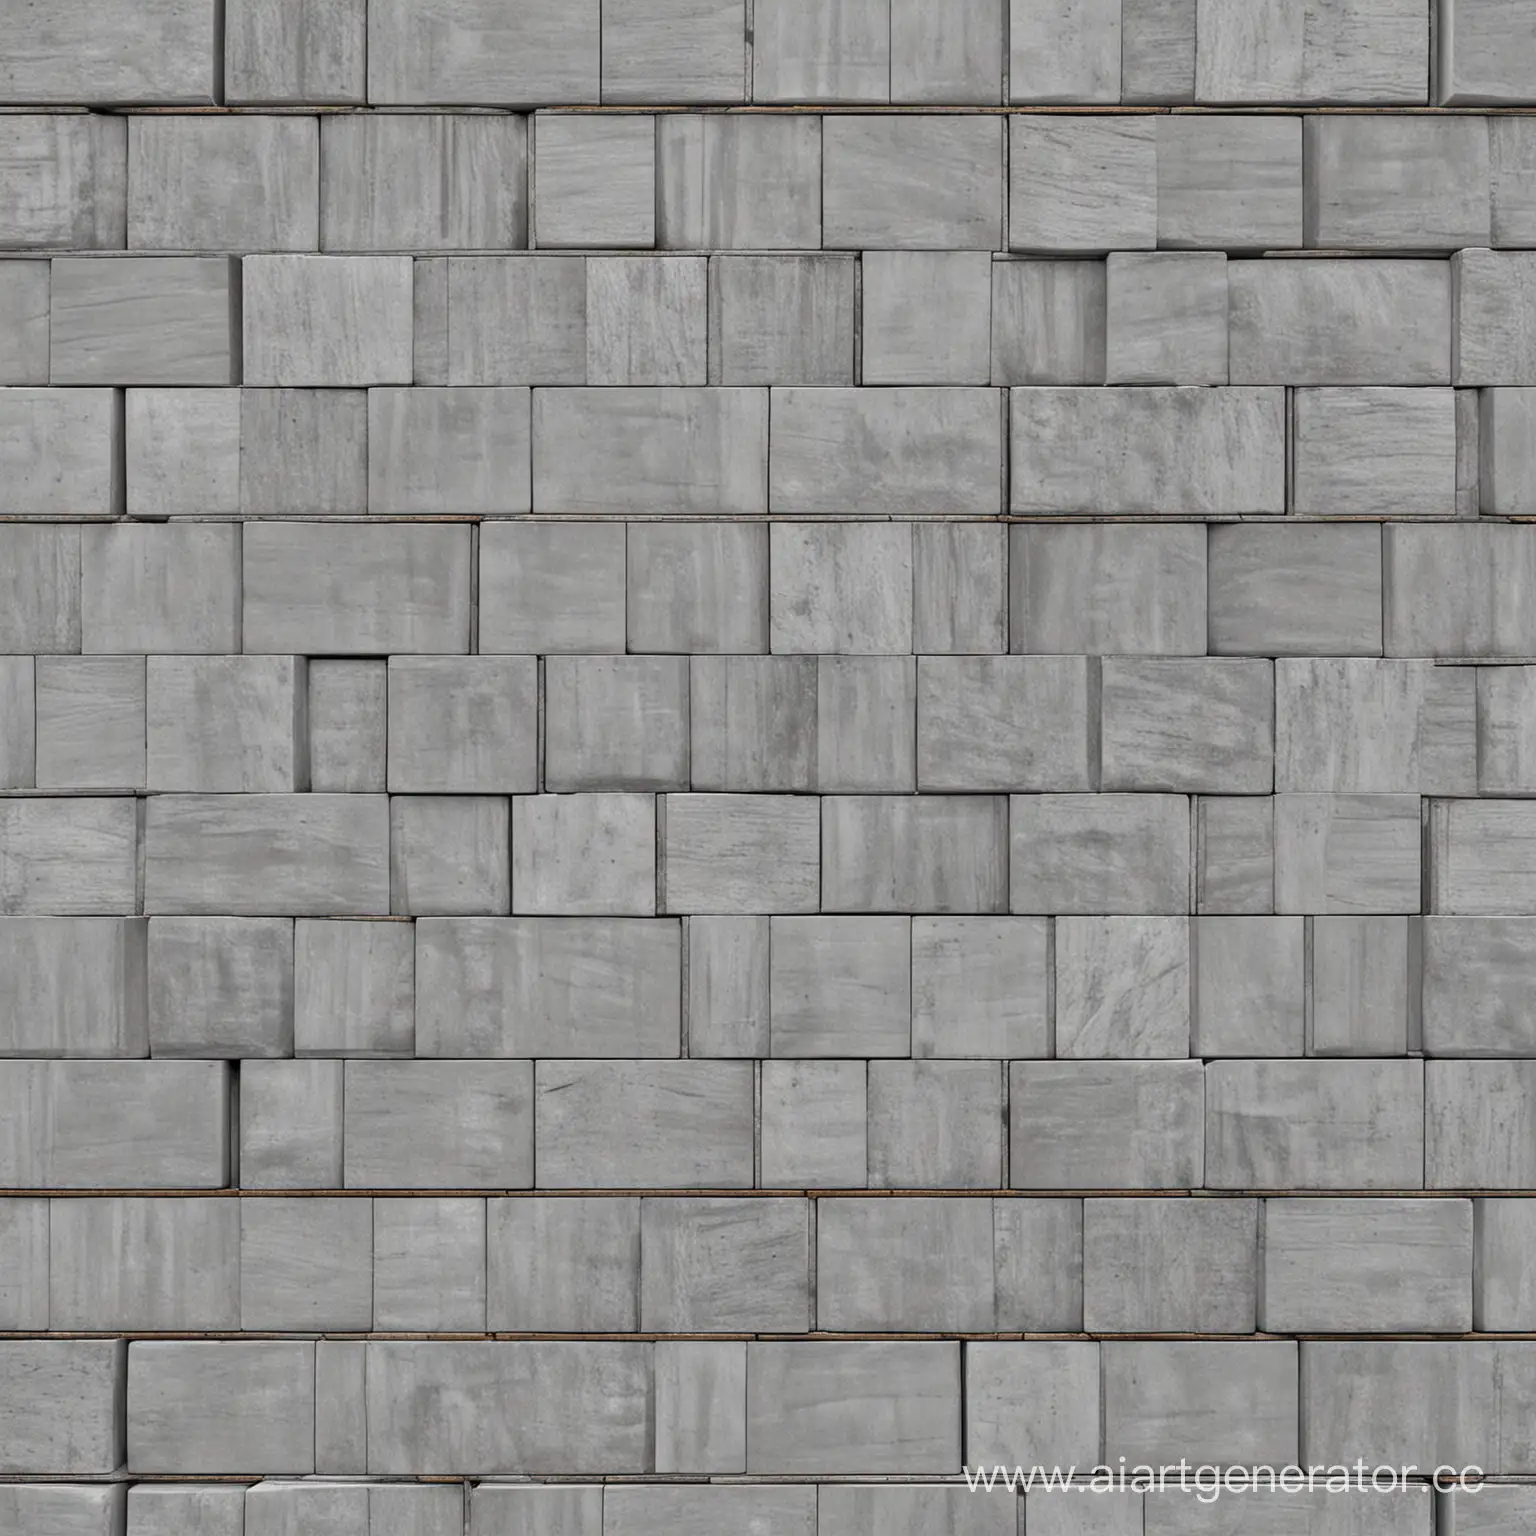 HighResolution-Megarealism-Ceramsite-Concrete-Blocks-Wall-in-Gray-Tones